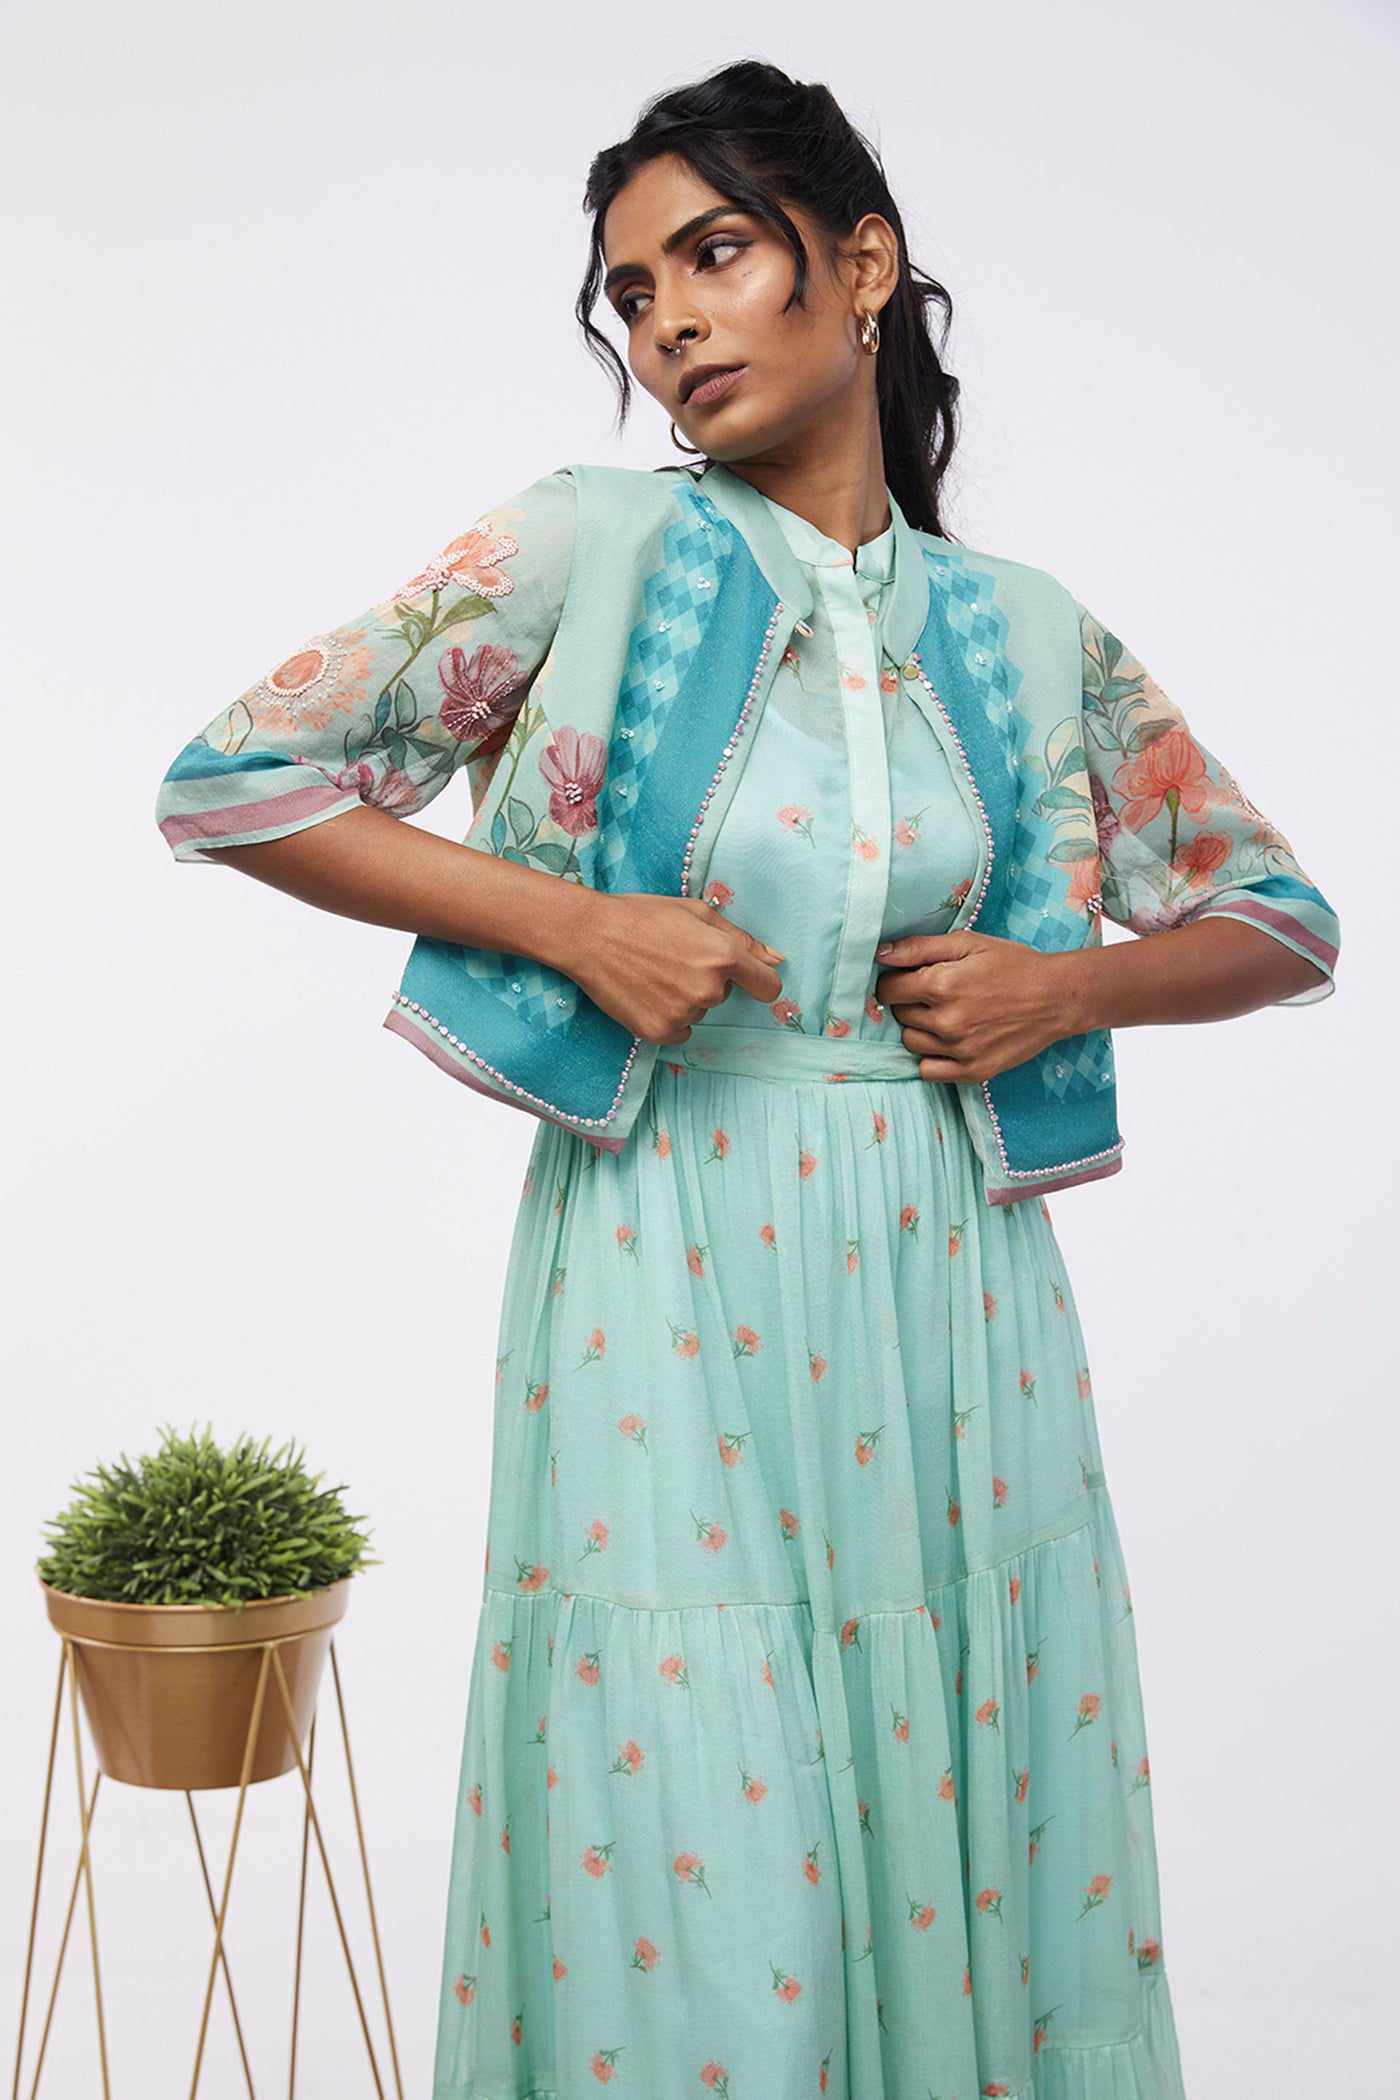 Sougat Paul Blooming Bud Printed Tiered Dress With Jacket western indian designer womenswear fashion online shopping melange singapore